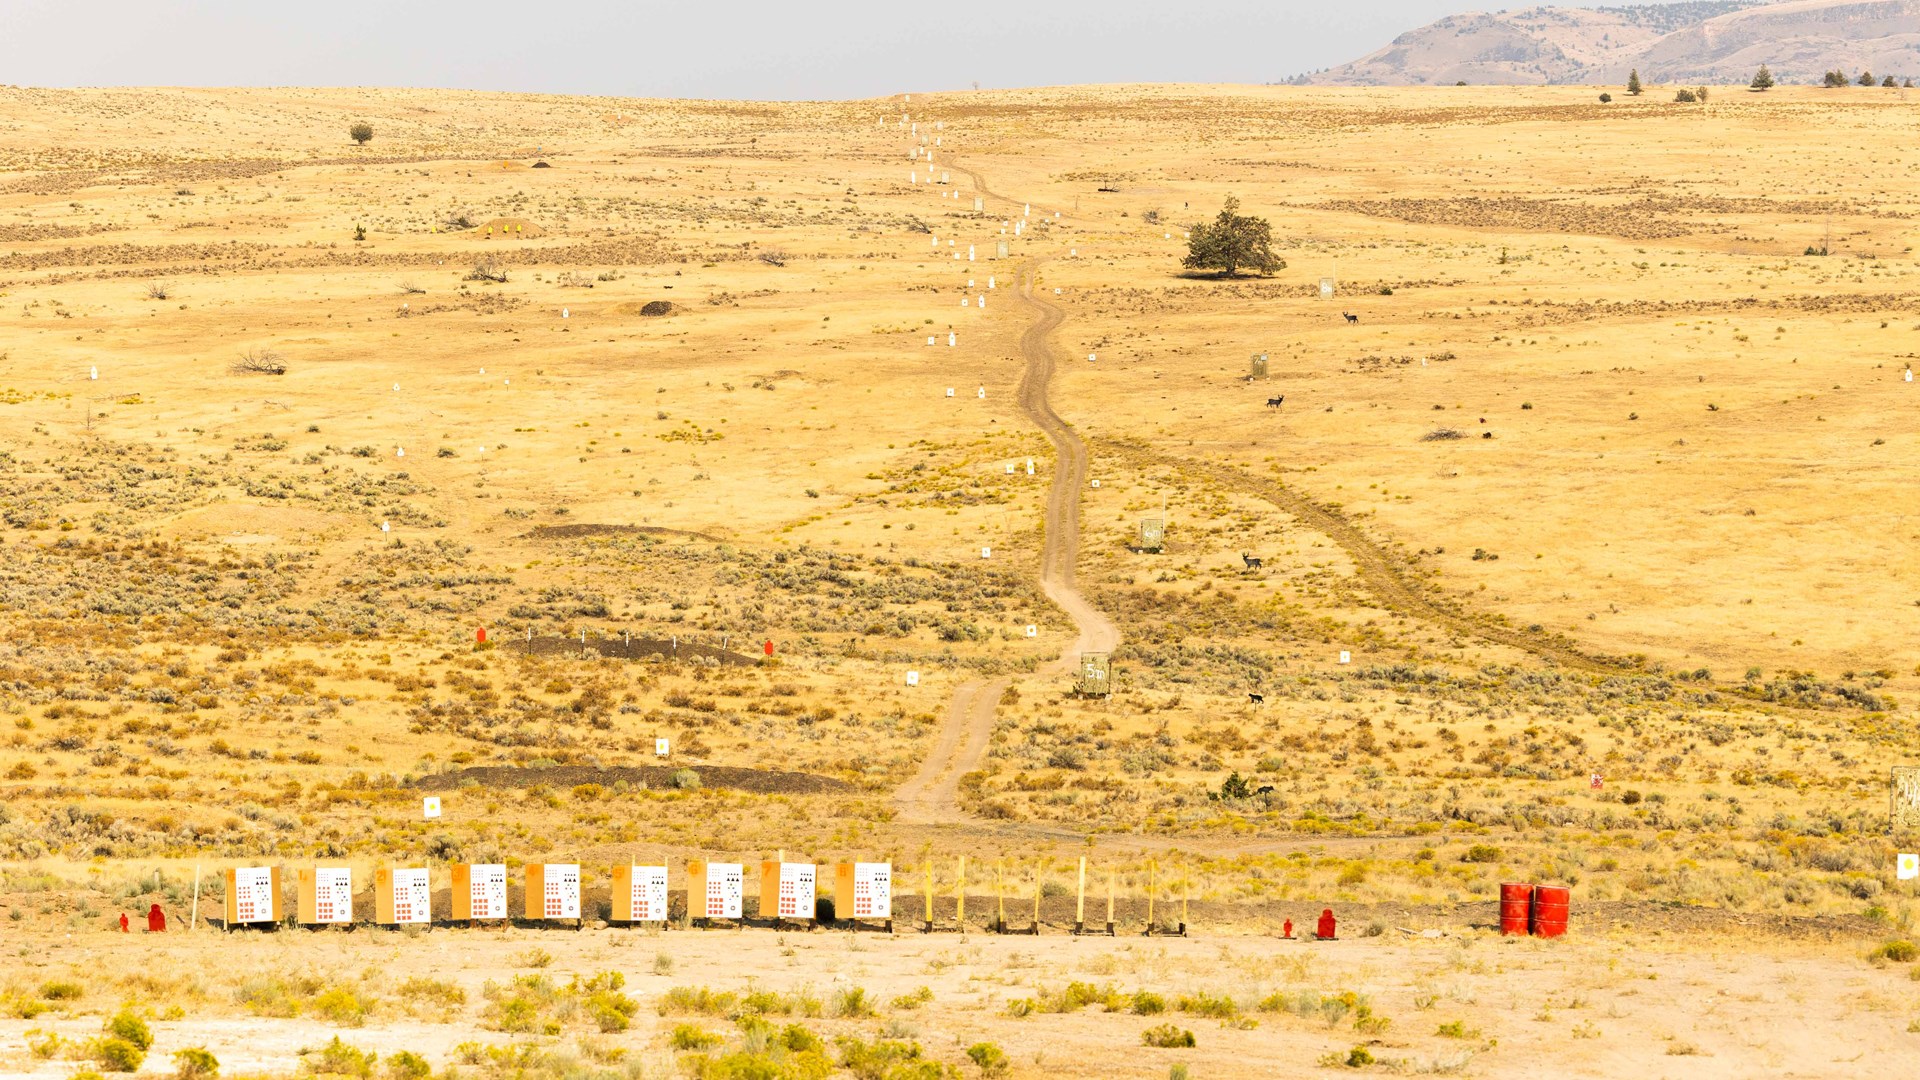 outdoor landscape view high desert target range arid environment road